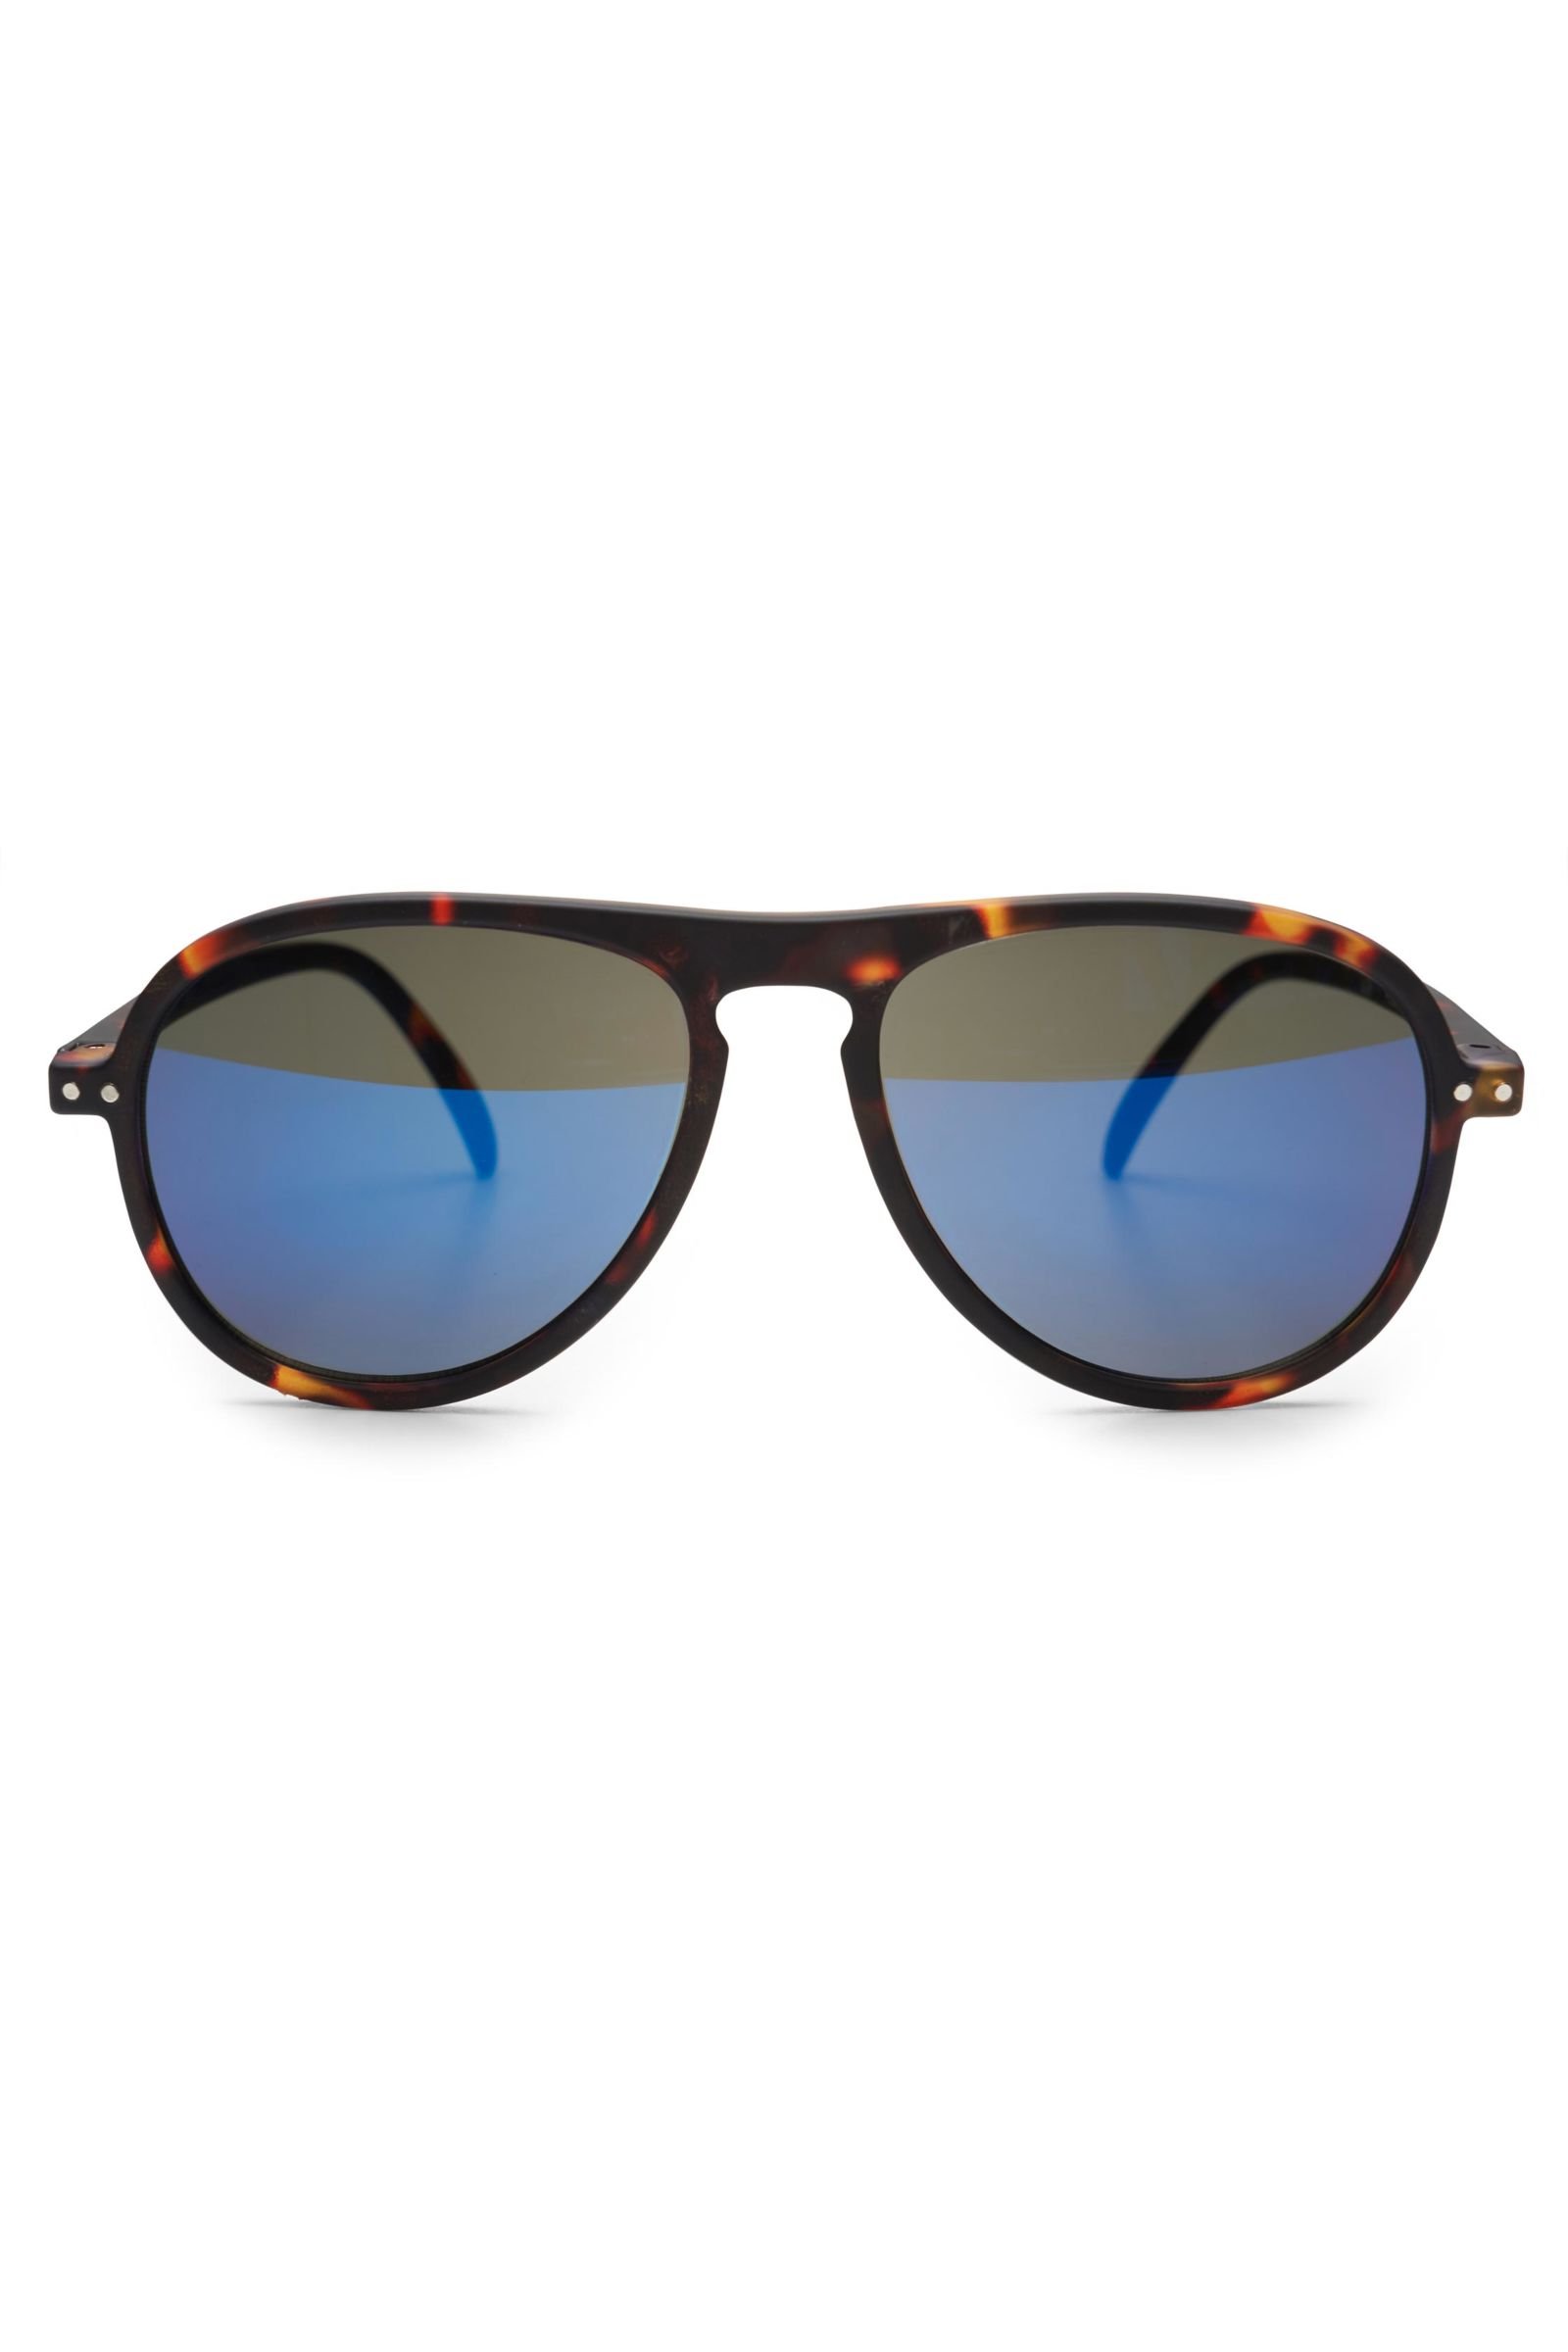 Sunglasses '#I Sun' dark brown patterned/blue